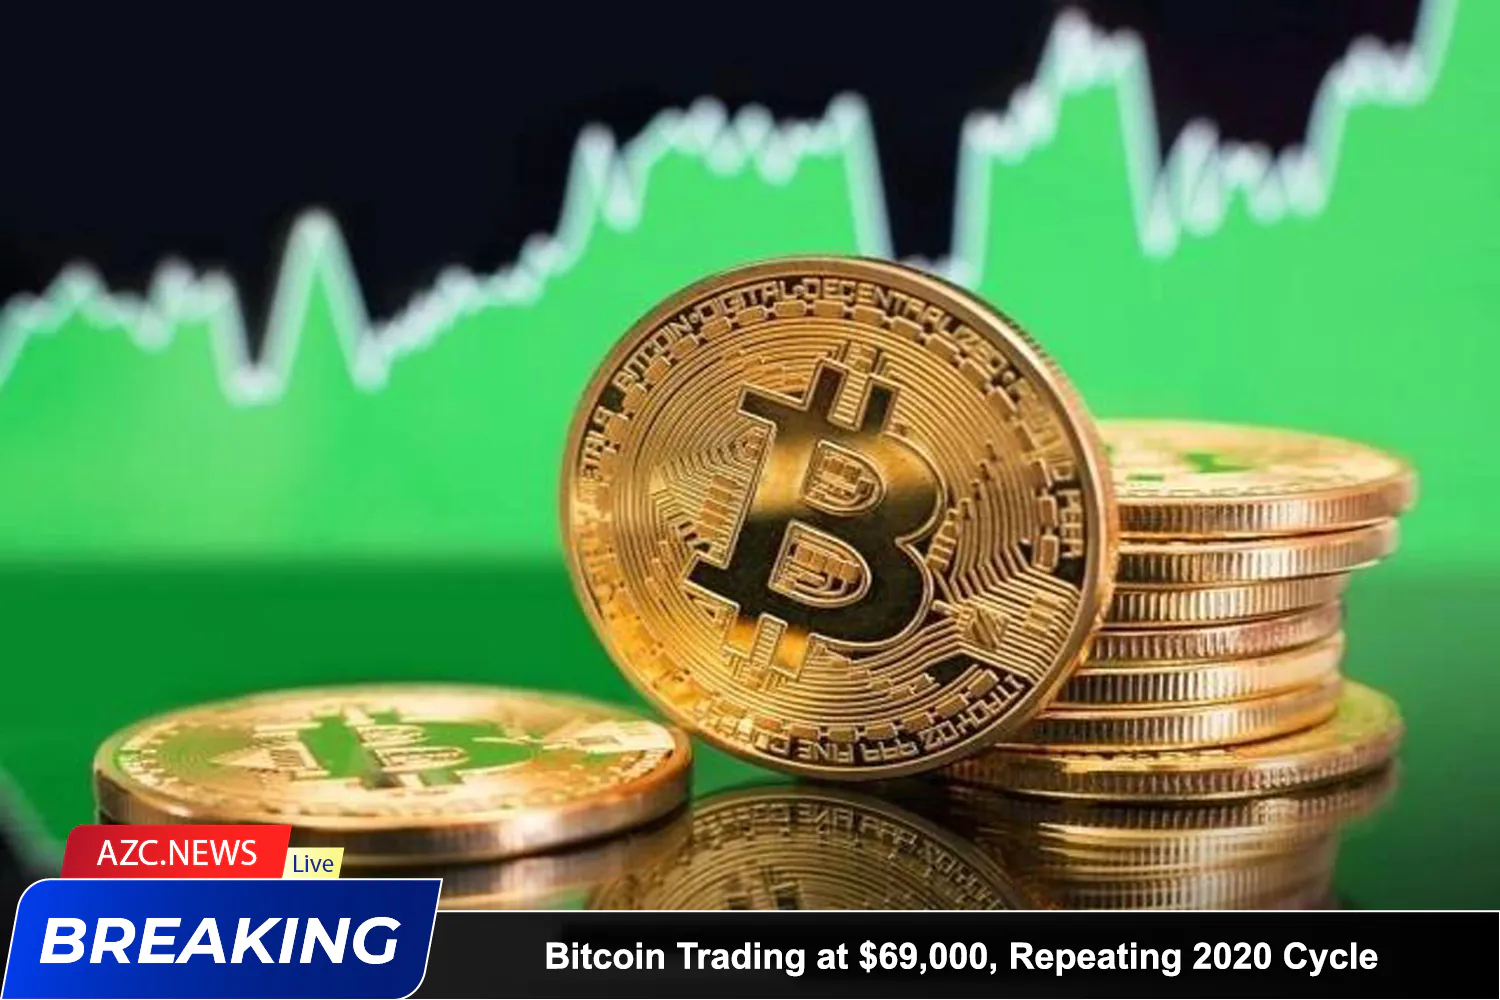 Azcnews Bitcoin Trading At $69,000, Repeating 2020 Cycle